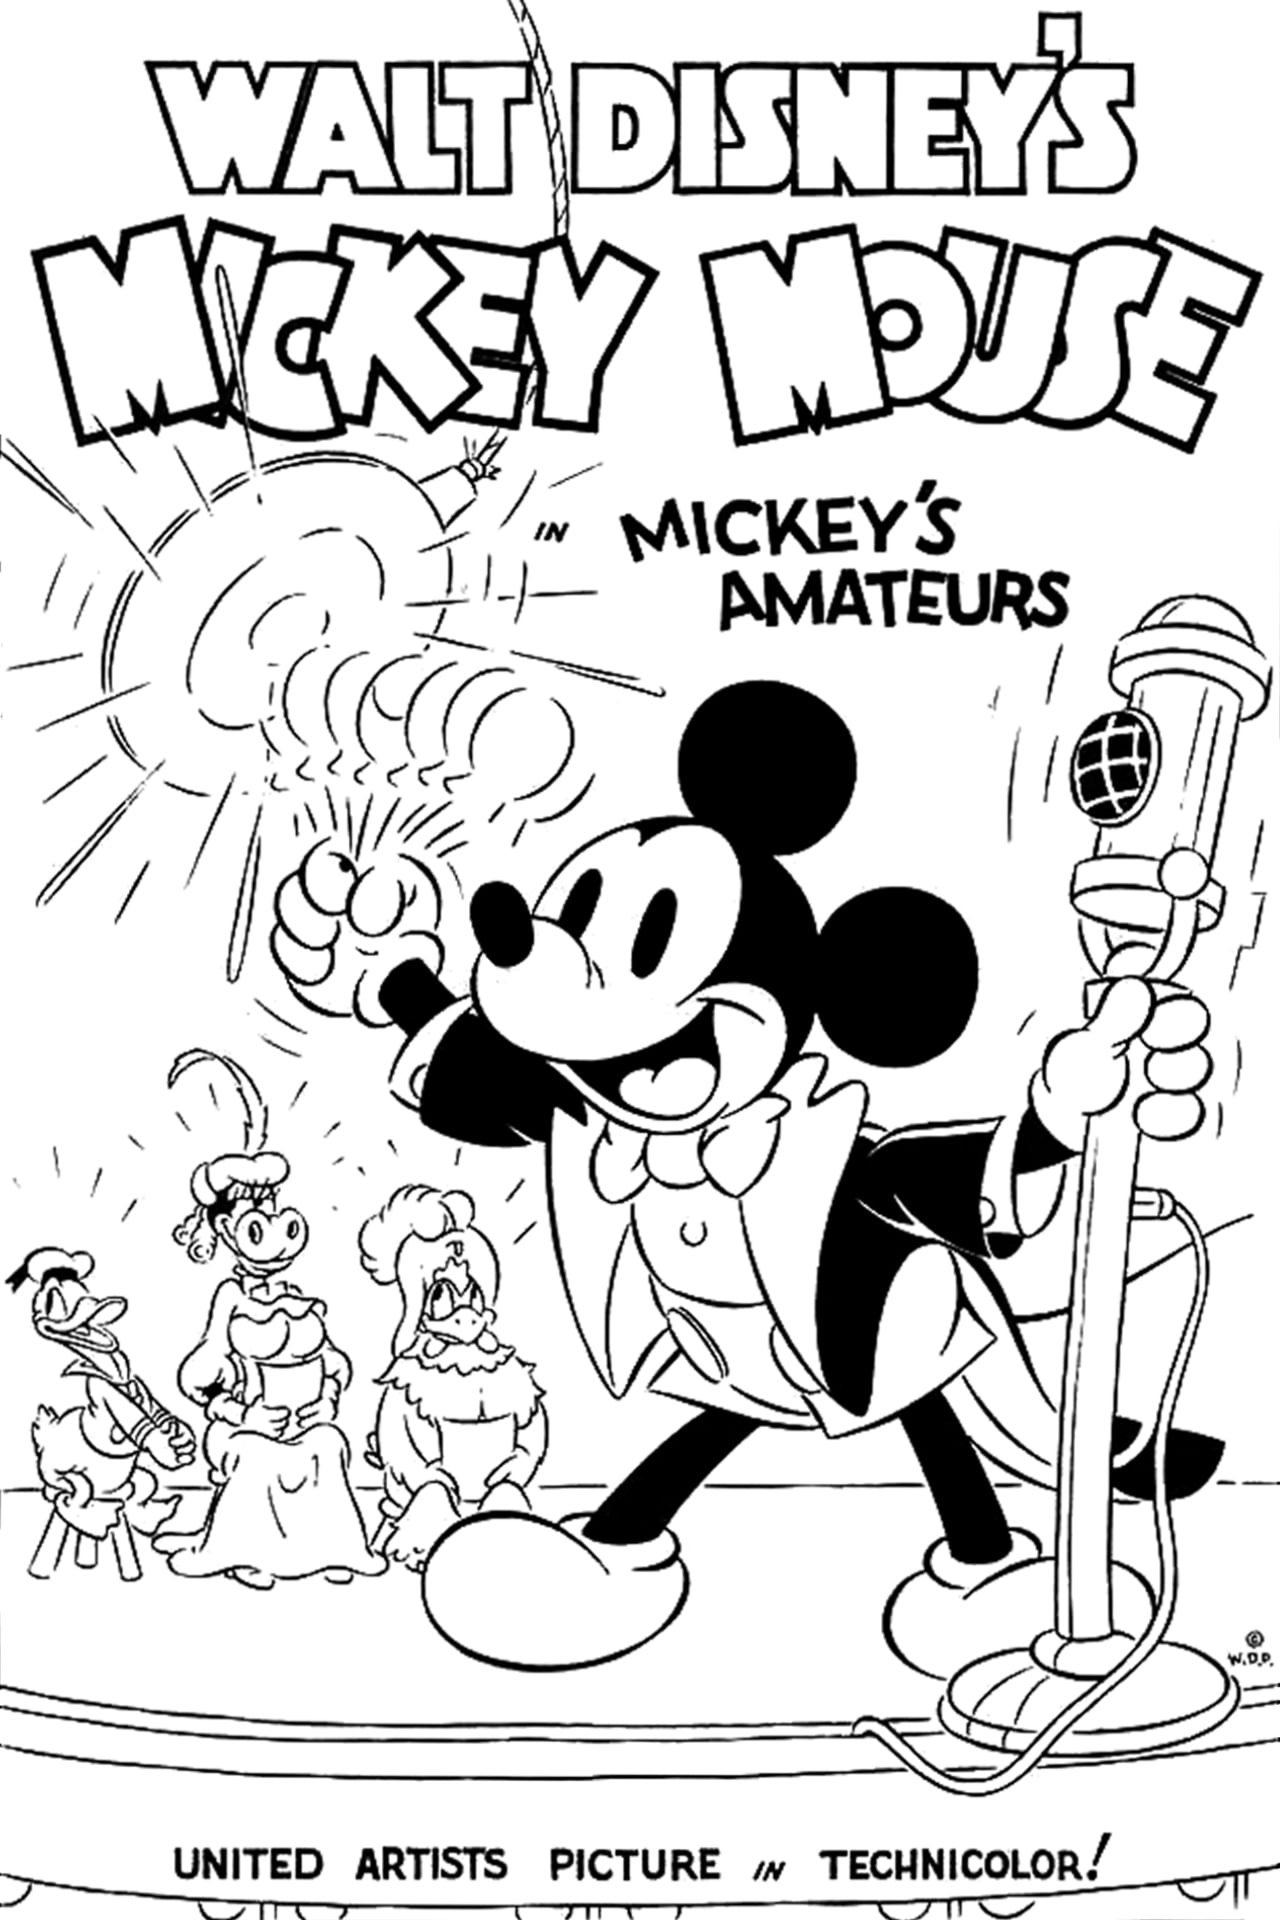 Mickey's Amateurs